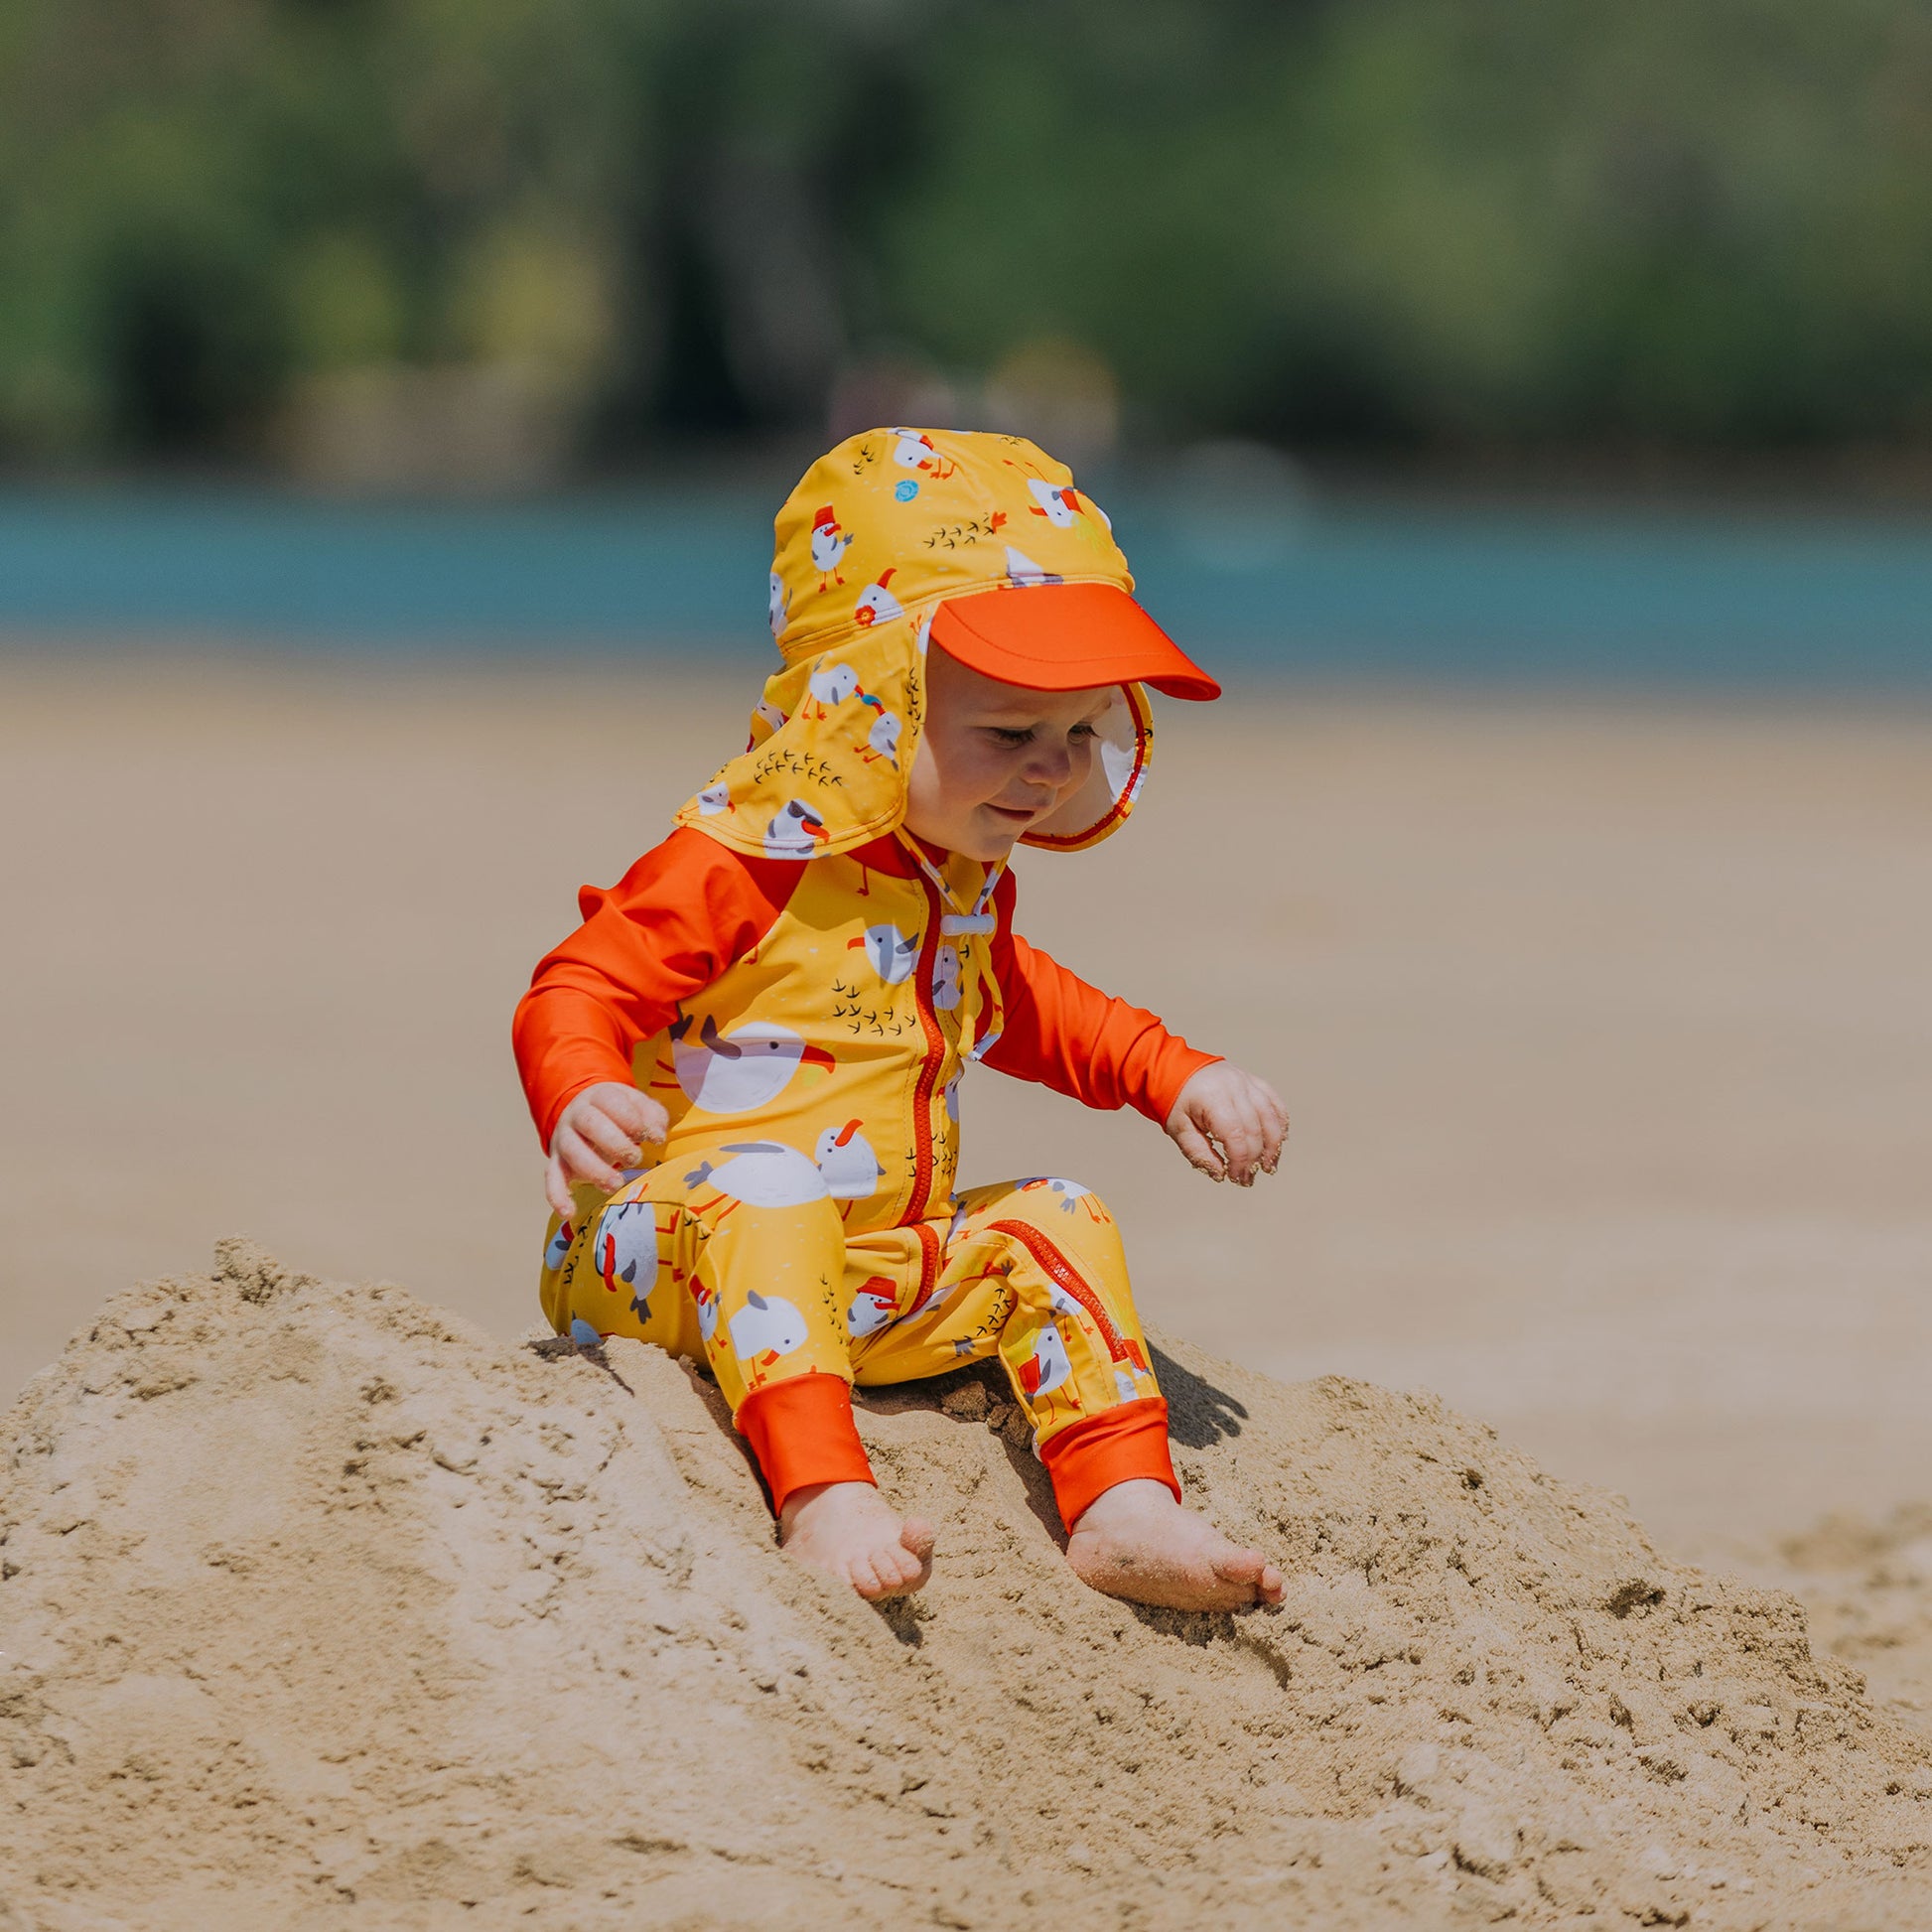 Pipi Swimwear  Full Coverage Sun Safe Swimwear for Babies & Kids